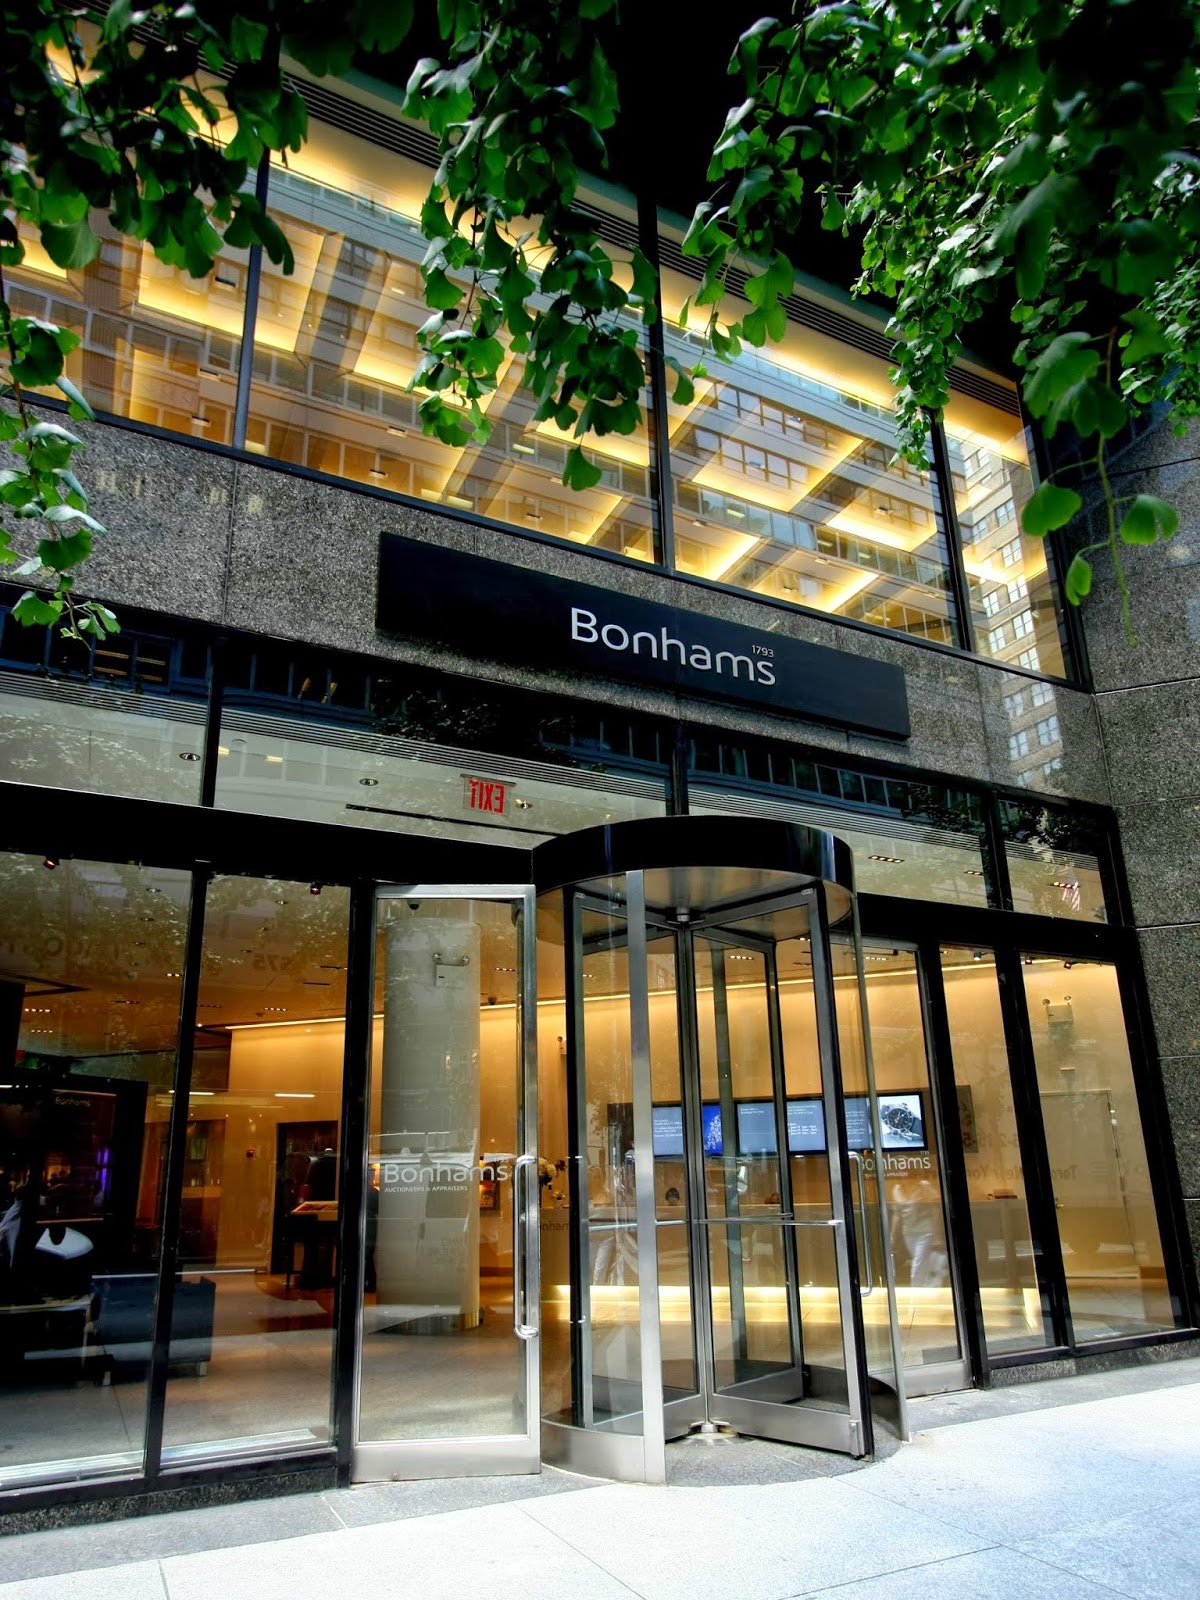 Photo of Bonhams in New York City, New York, United States - 1 Picture of Point of interest, Establishment, Finance